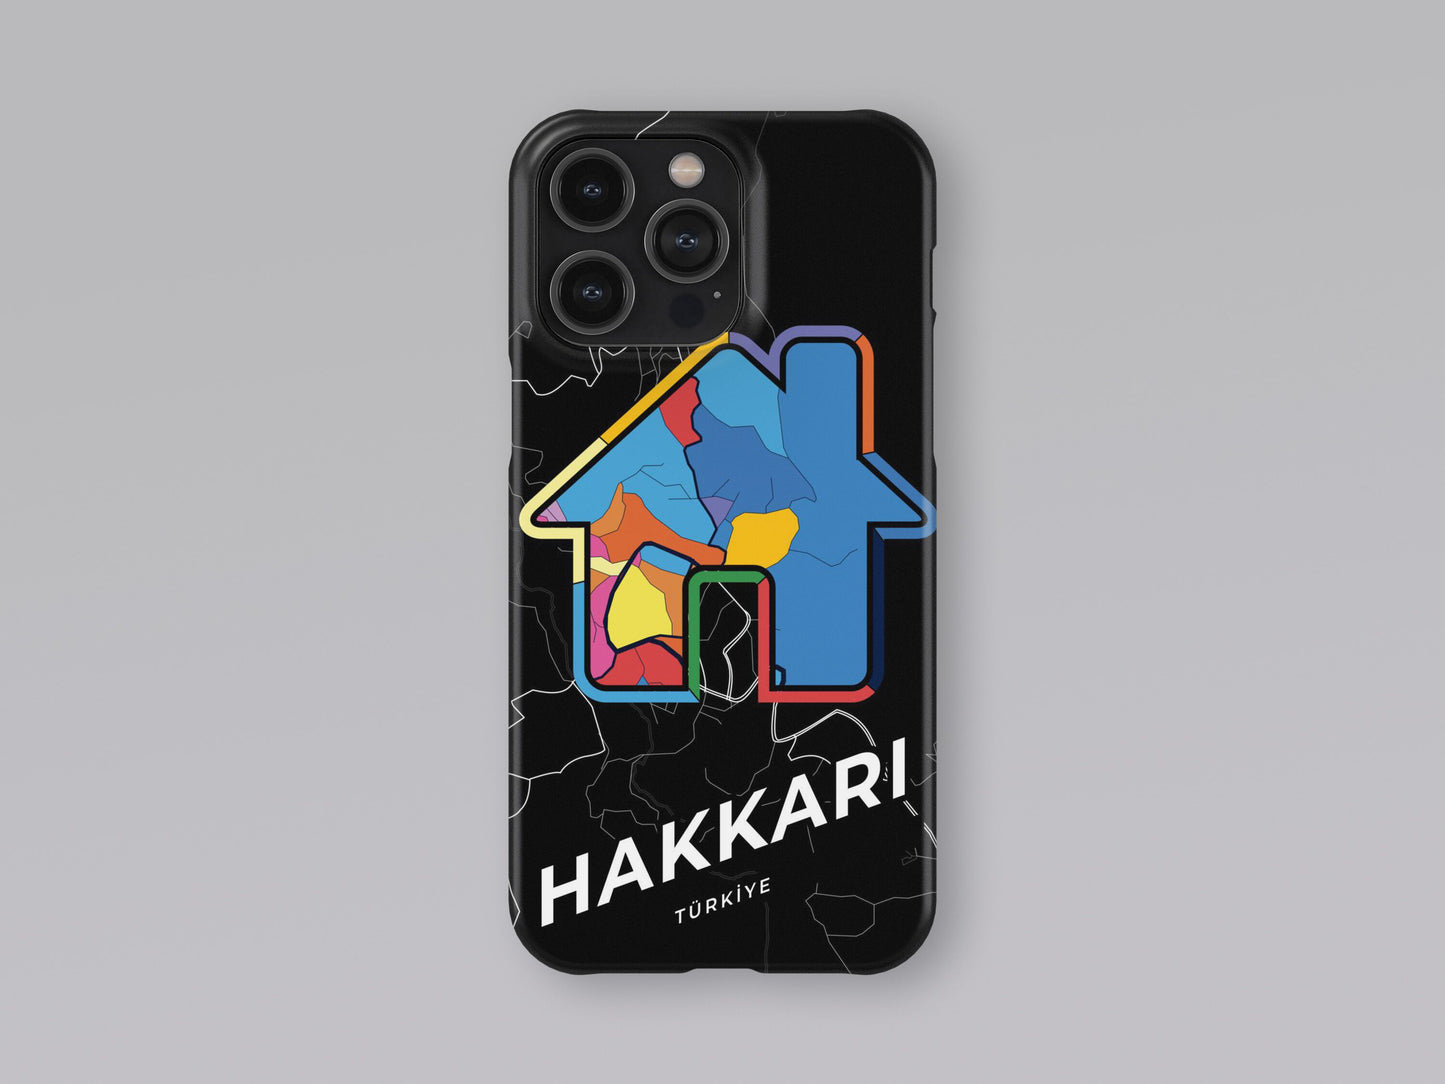 Hakkâri Turkey slim phone case with colorful icon. Birthday, wedding or housewarming gift. Couple match cases. 3